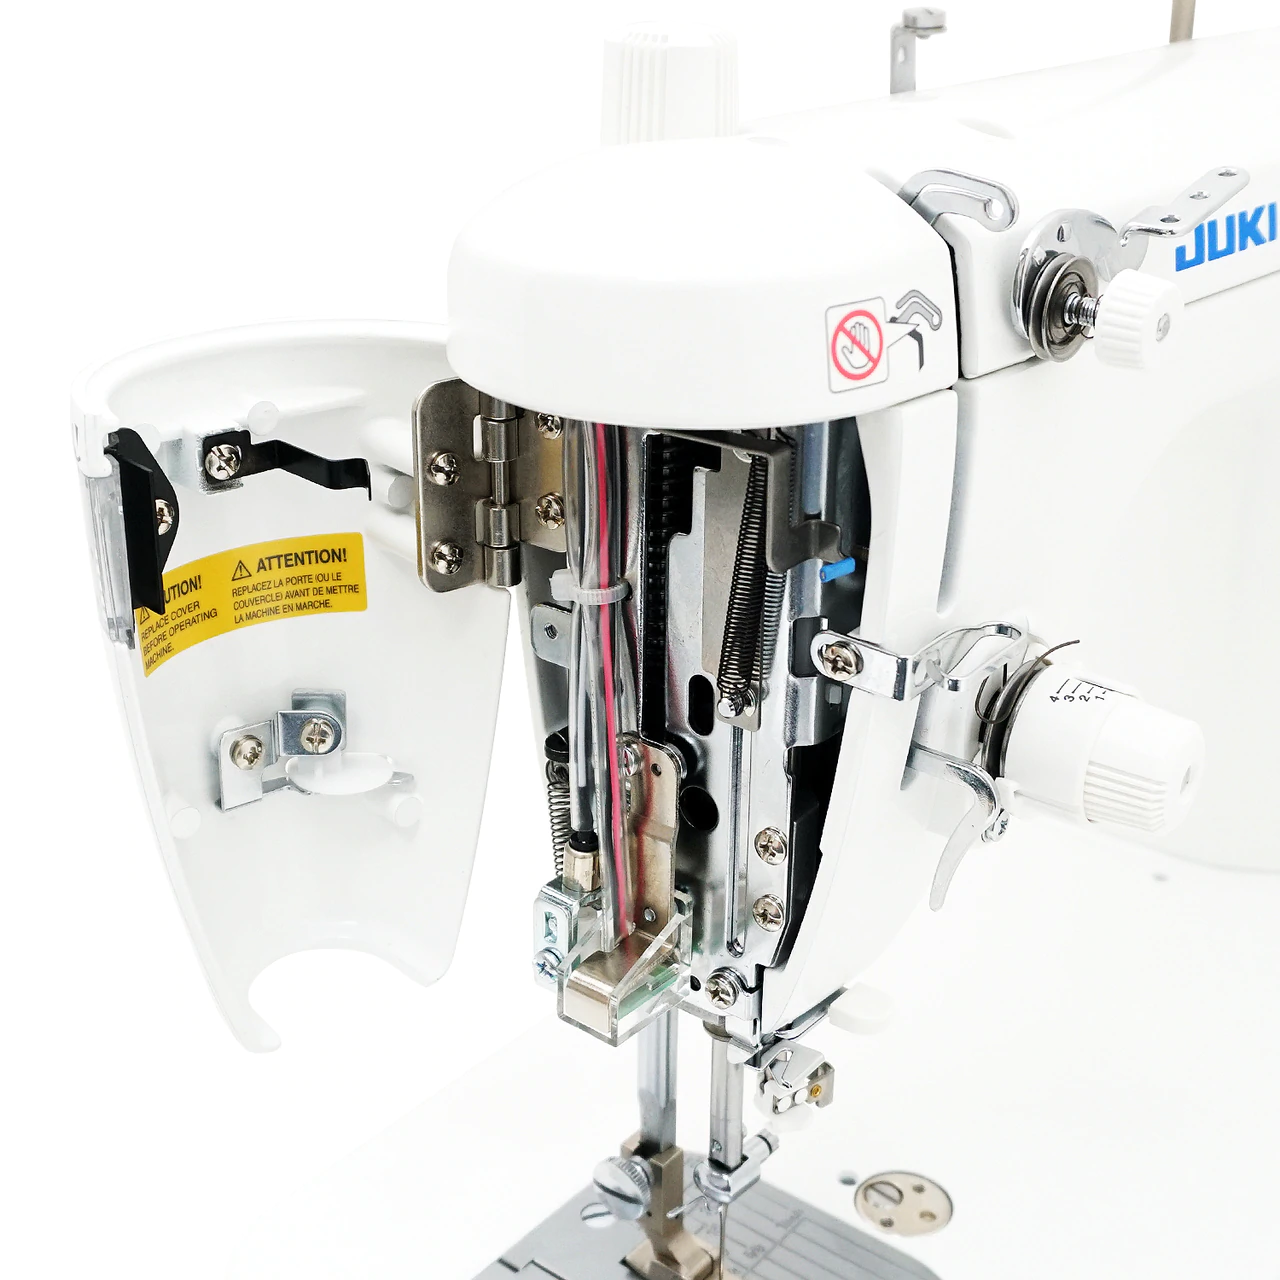 JUKI  Haruka TL-18QVP Portable Quilting and Sewing Machine